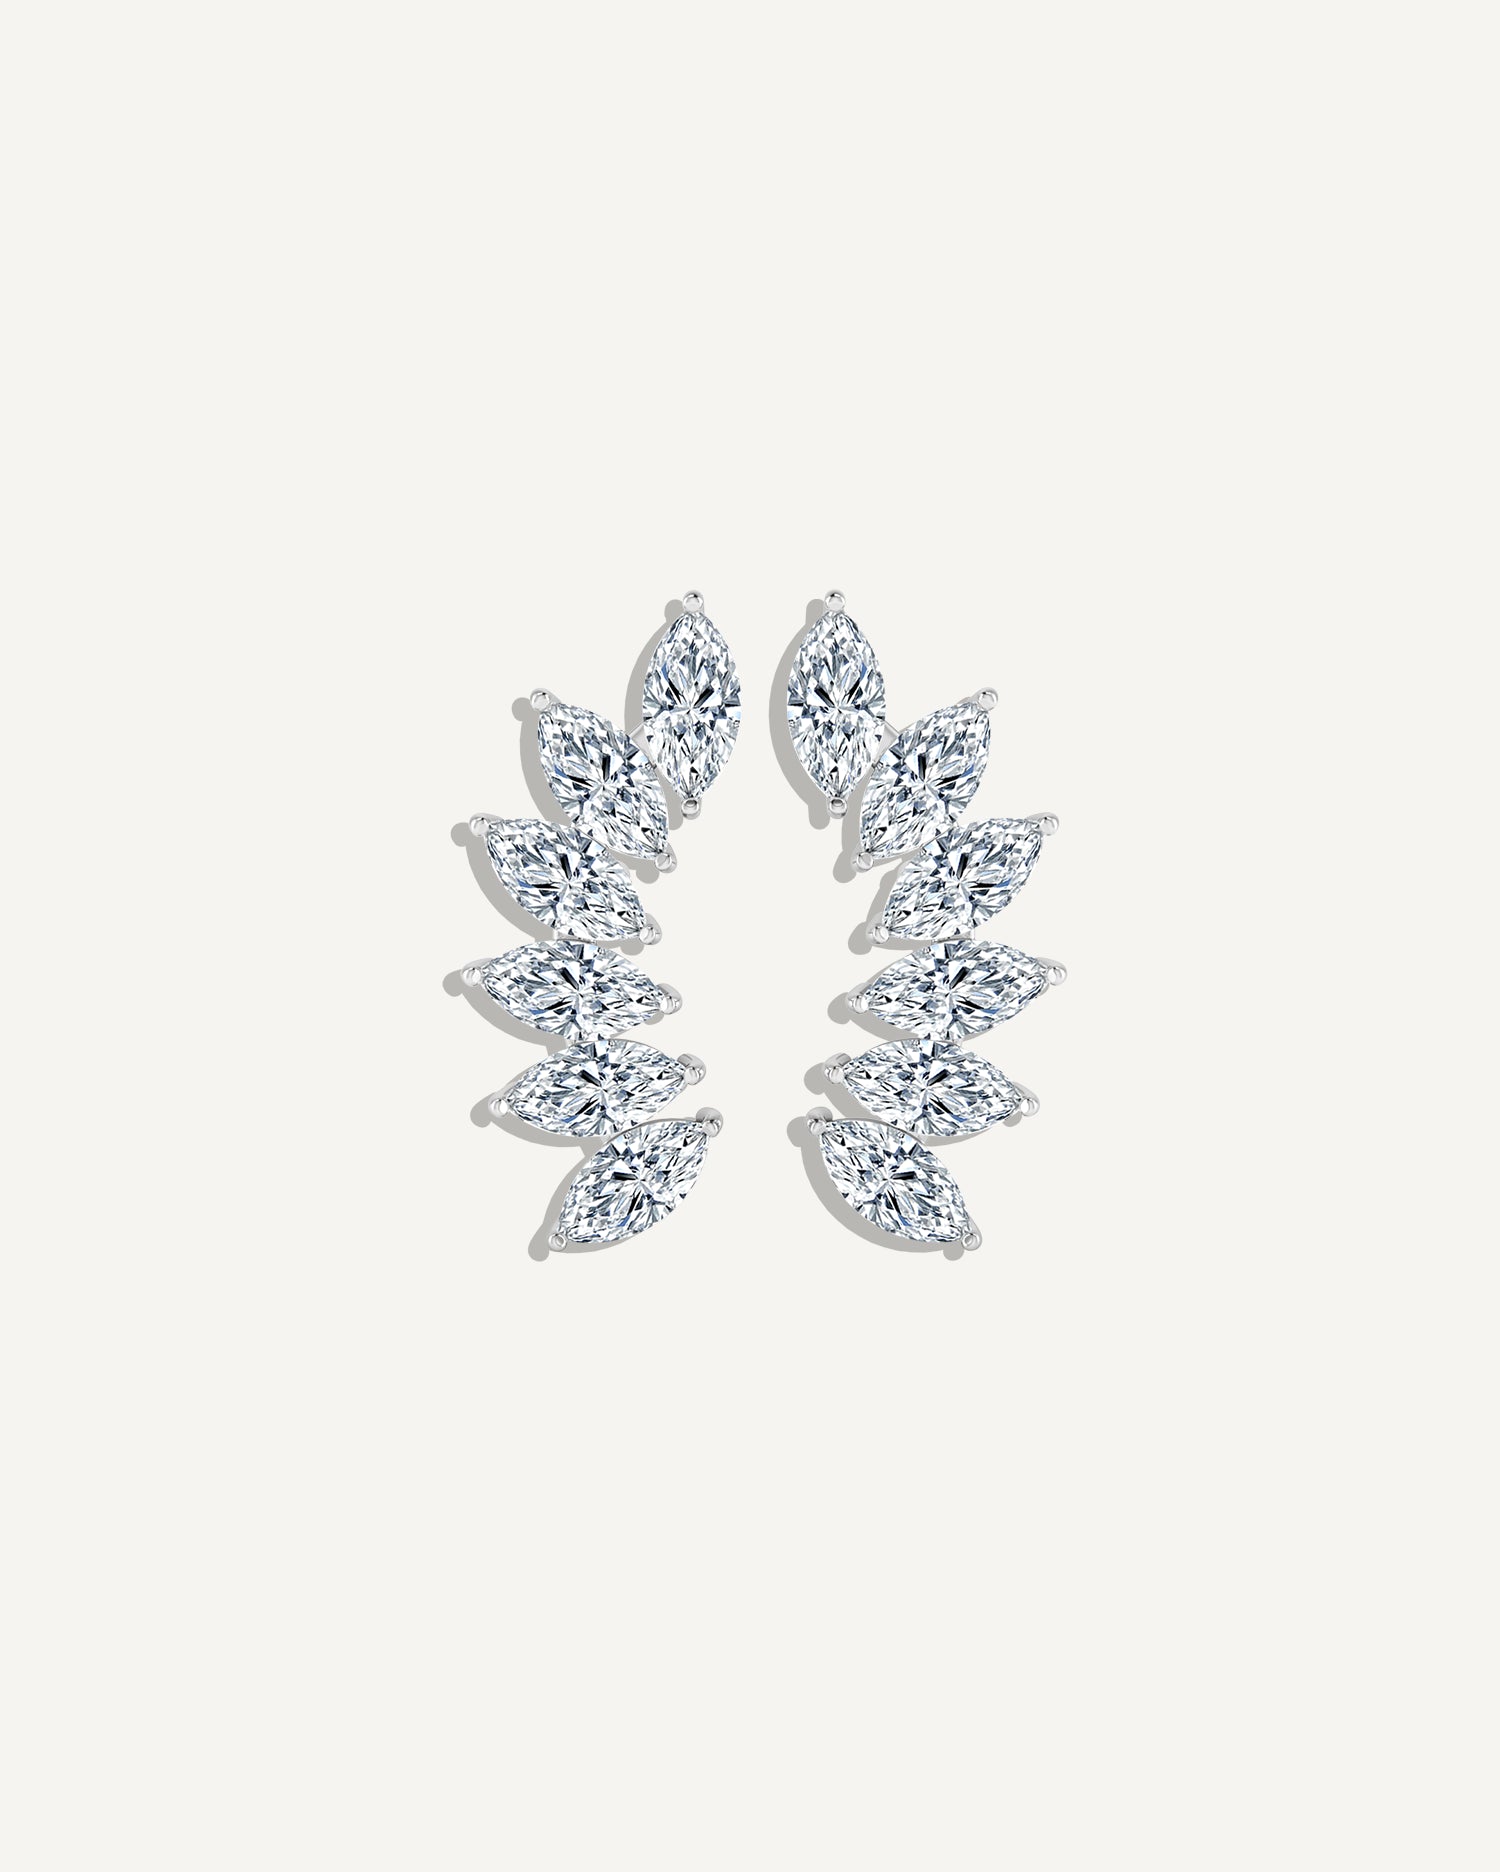 Fire Marquise Diamond Earrings